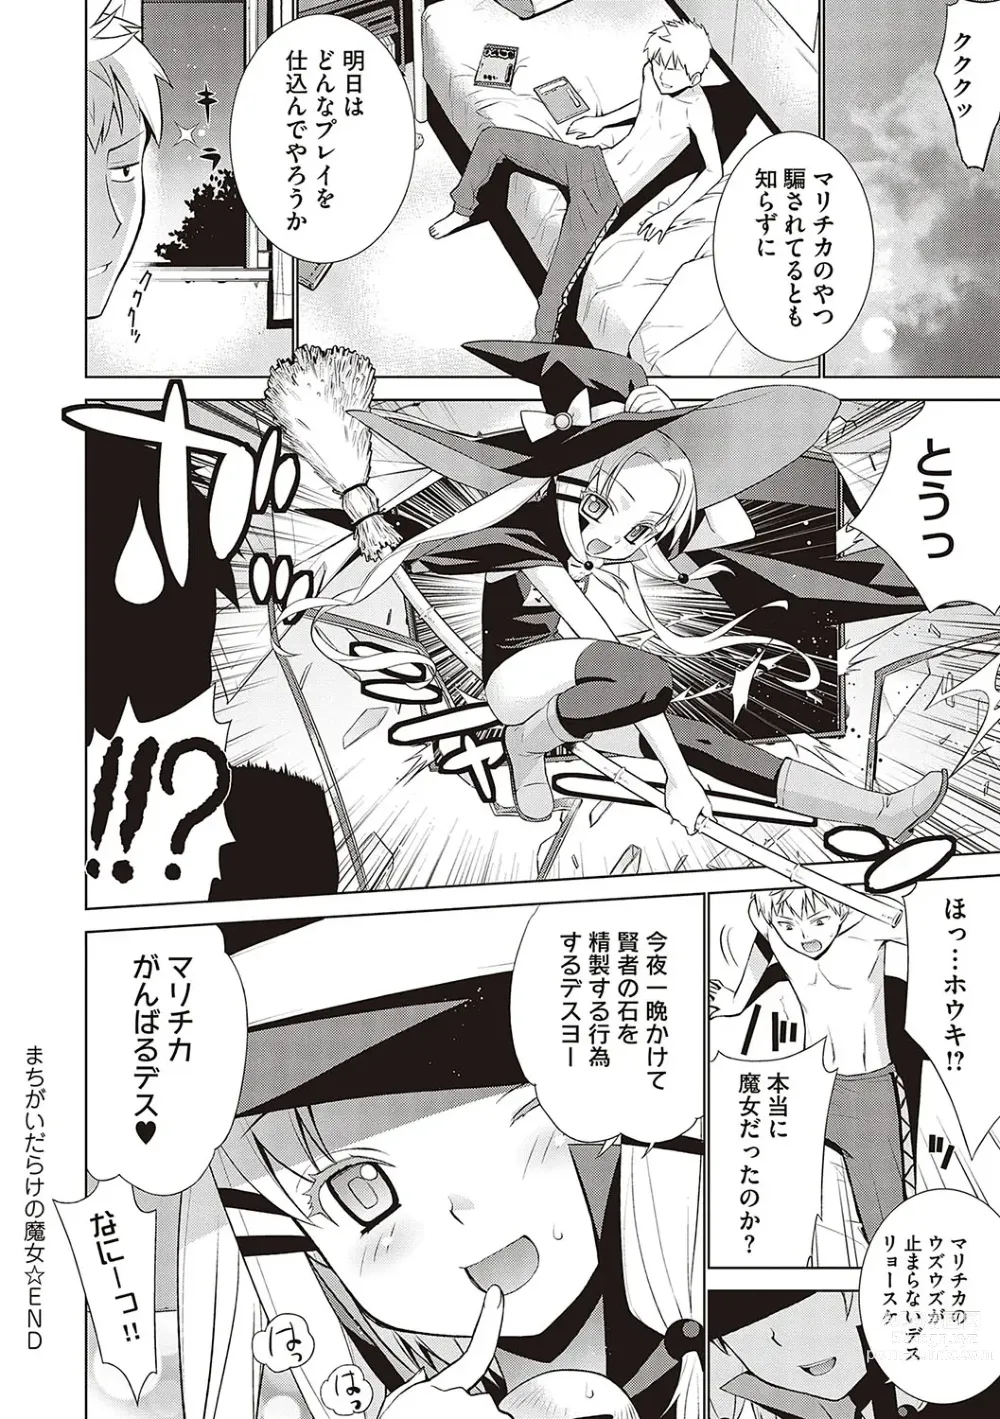 Page 267 of manga KOAKUMA DAISY